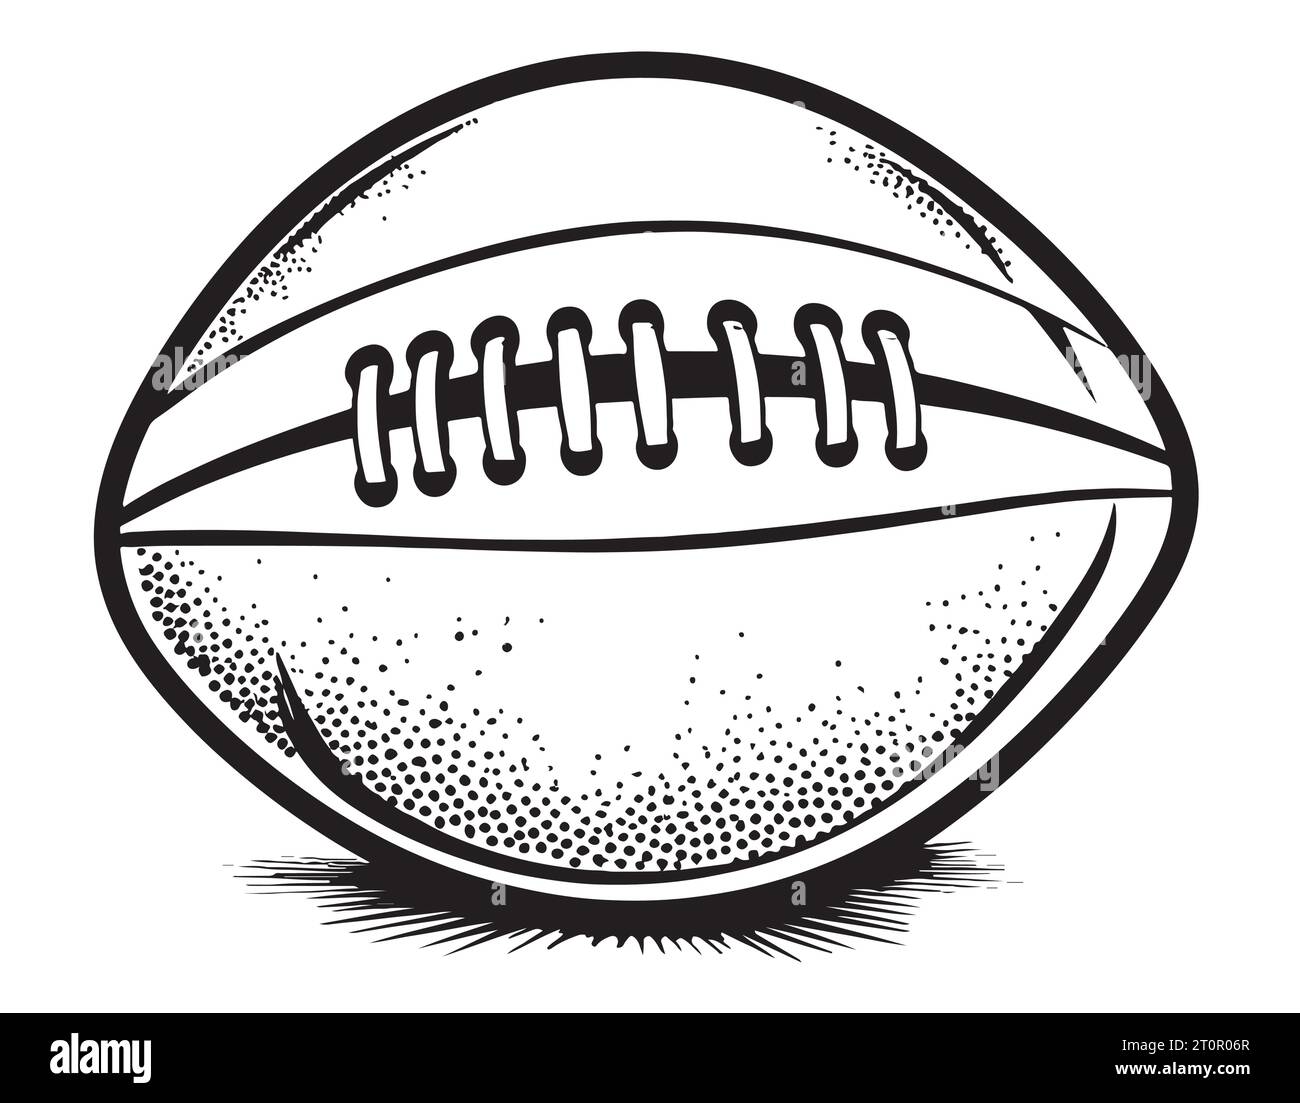 American football ball emblem sketch hand drawn Vector illustration Sports Stock Vector